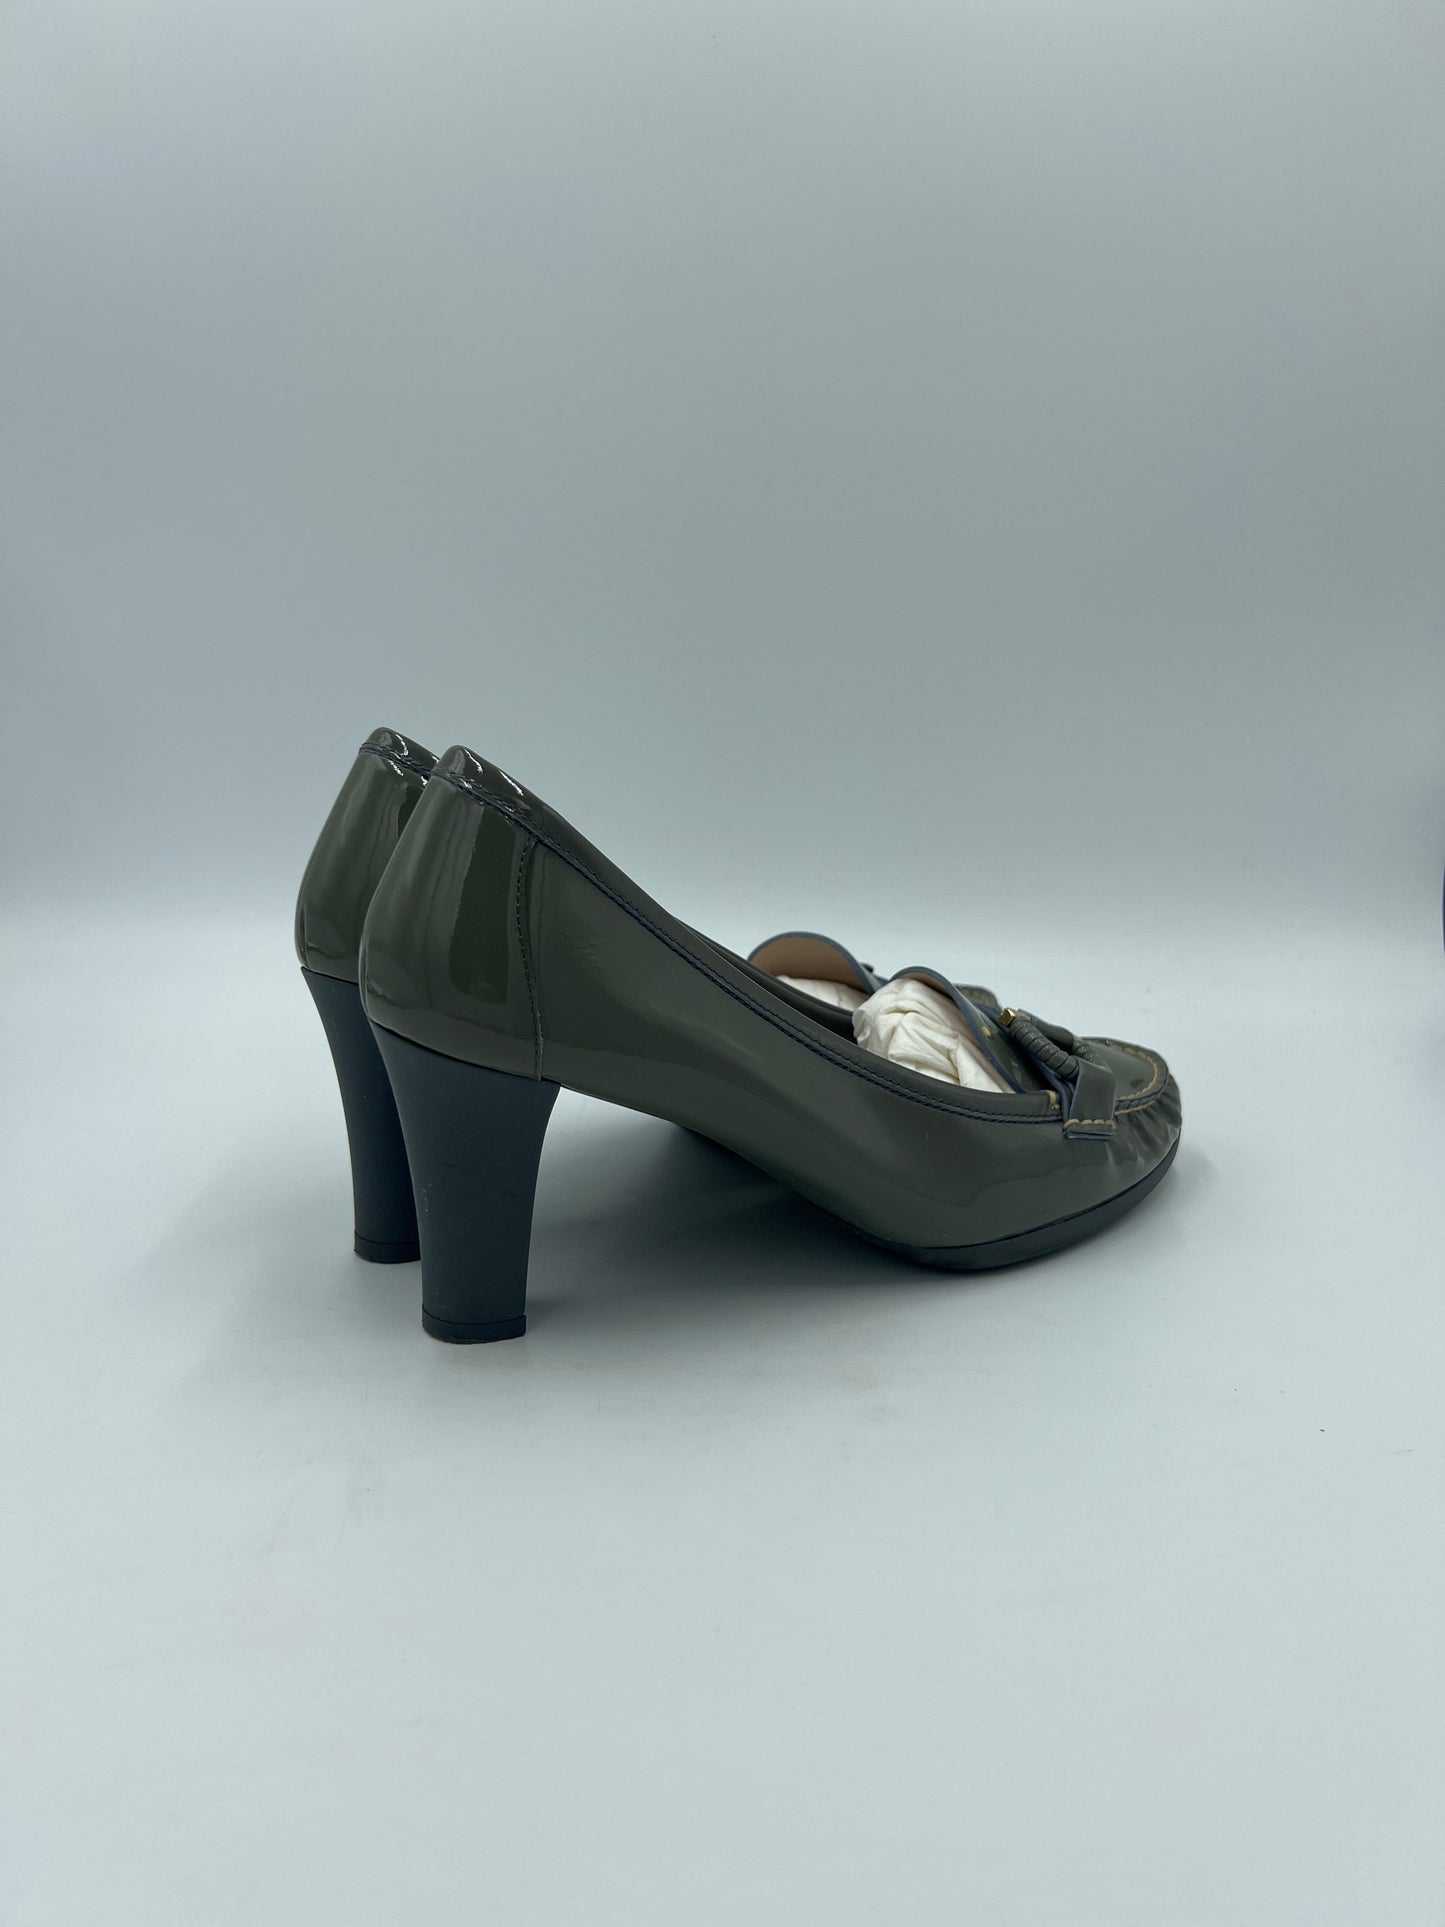 Shoes Designer By Salvatore Ferragamo  Size: 10.5